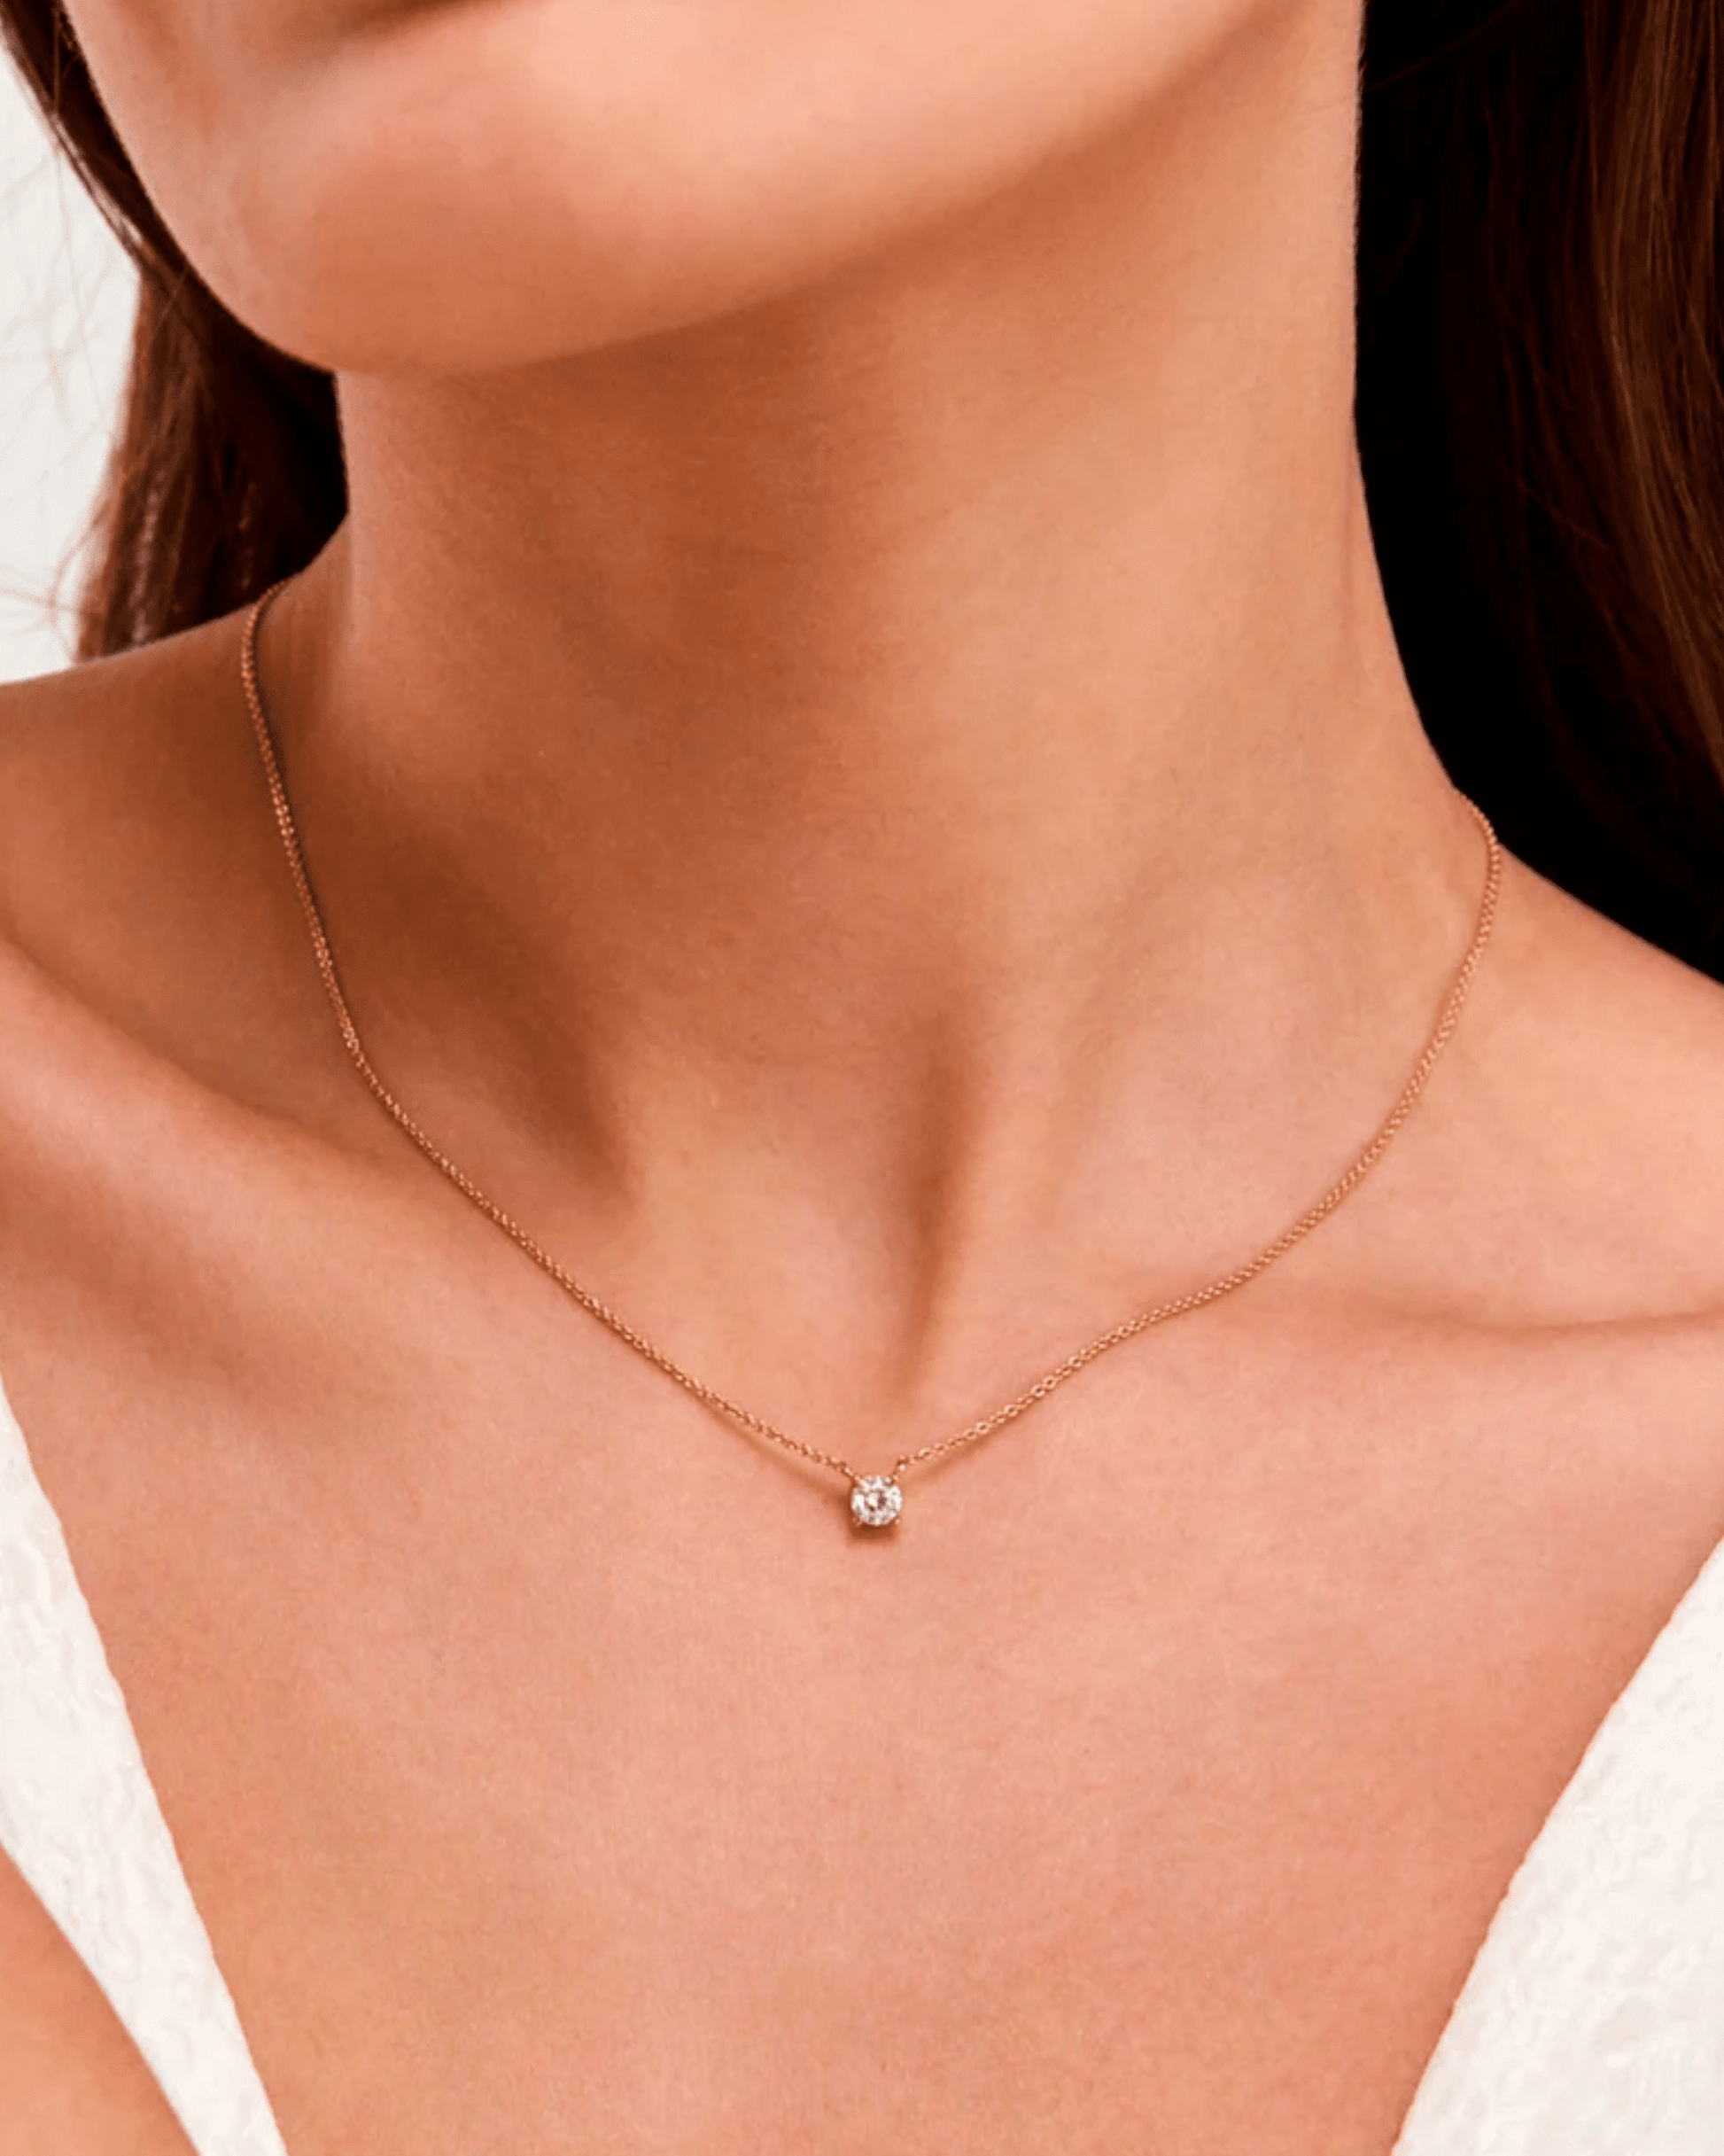 Set of Round Solitaire Diamond & Links Chain Necklaces - 18K Gold Vermeil Necklaces magal-dev 